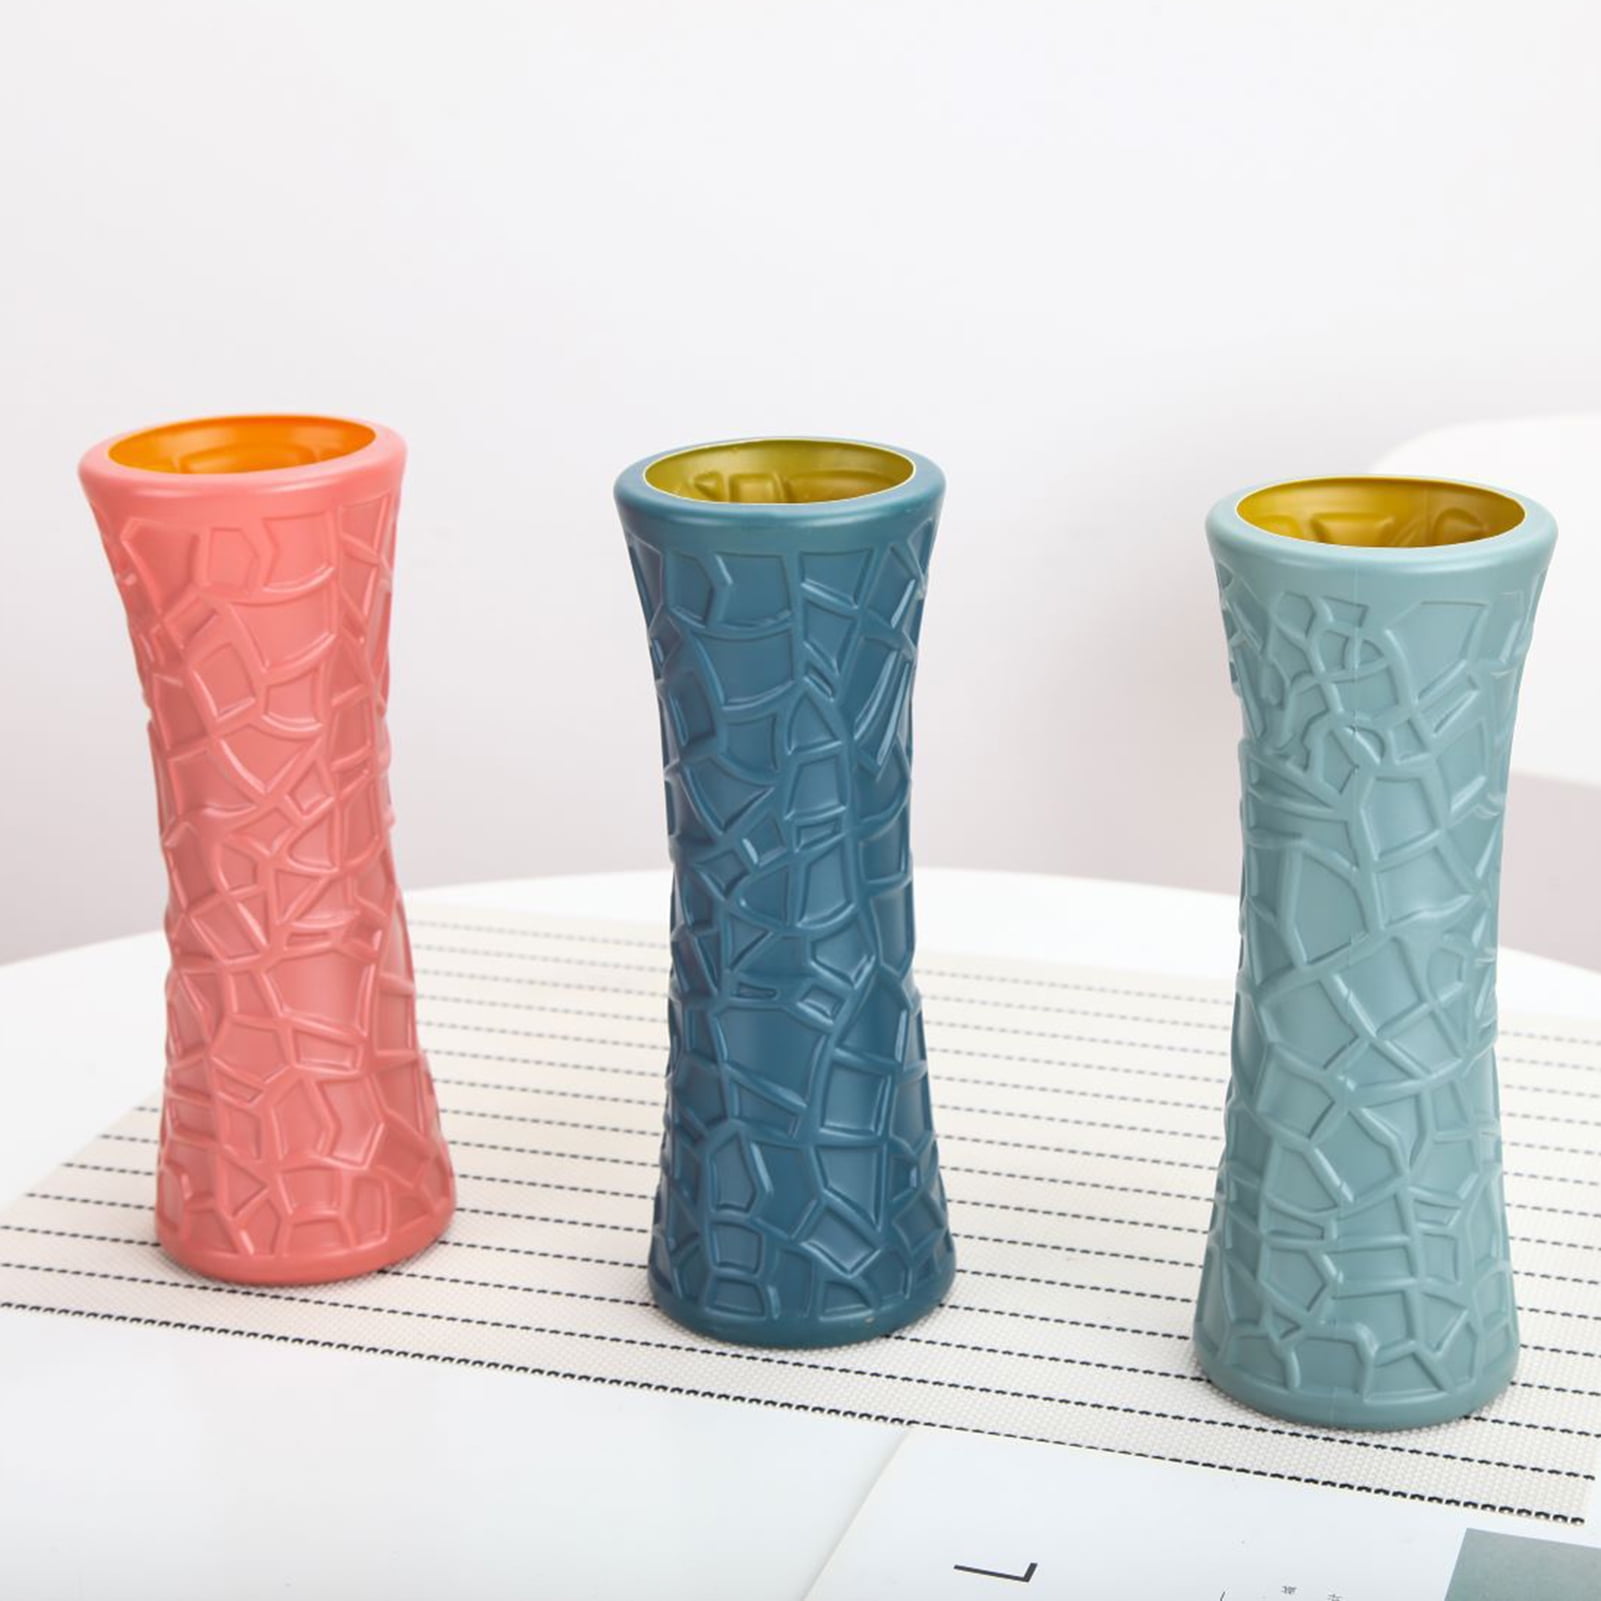 Details about   Plastic Flower Vase Creative Nordic Decoration Home Imitation Ceramic Vases Deco 